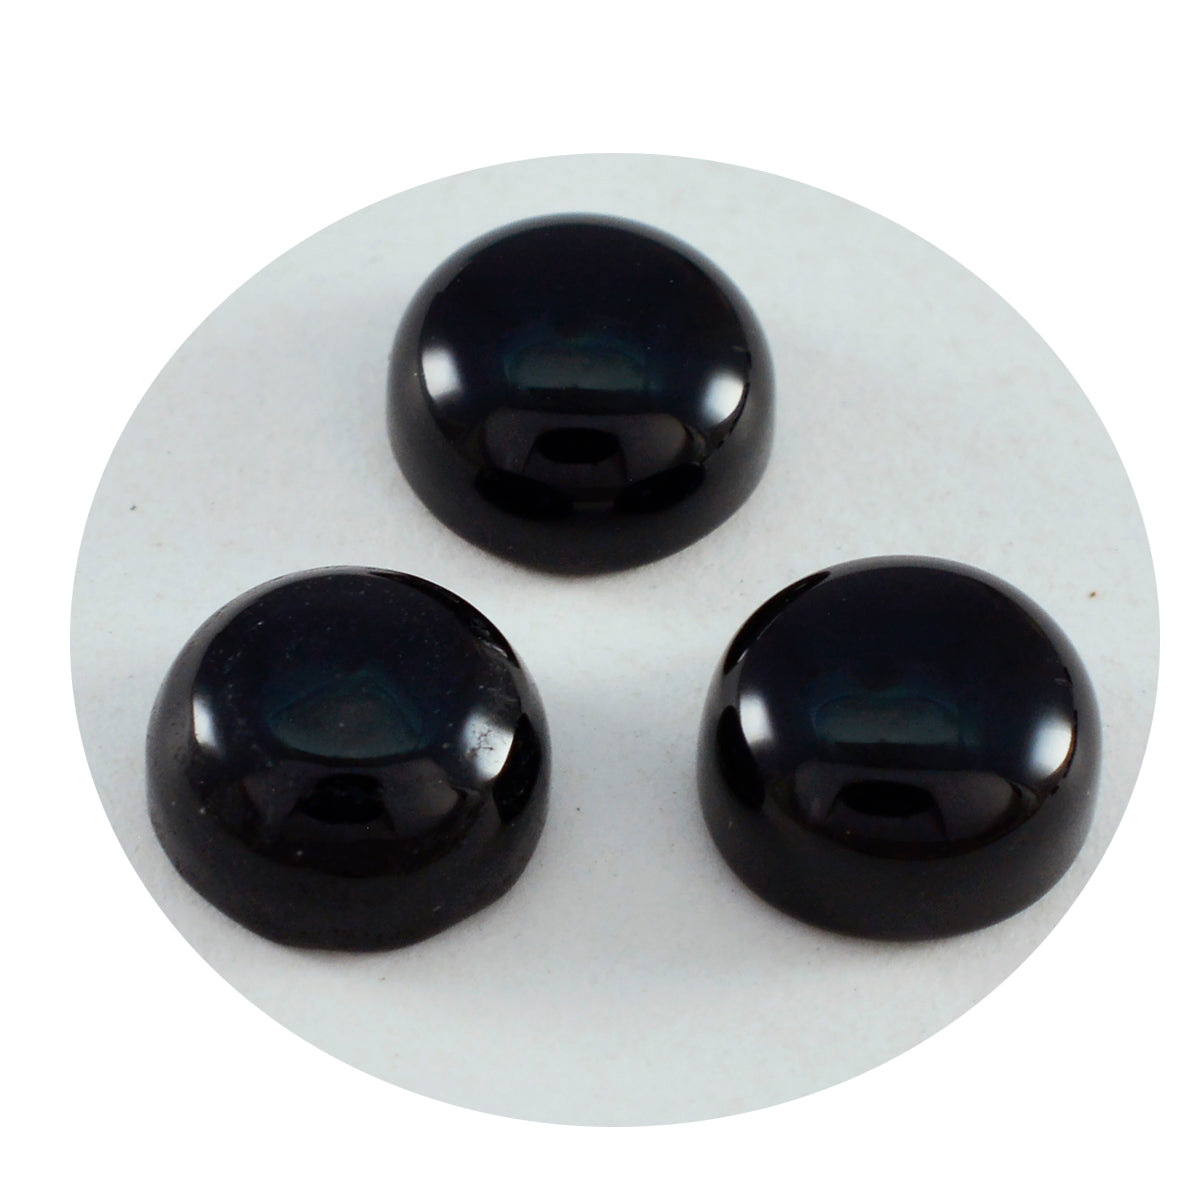 riyogems 1pc ブラックオニキス カボション 9x9 mm ラウンド形状の美しい品質の石